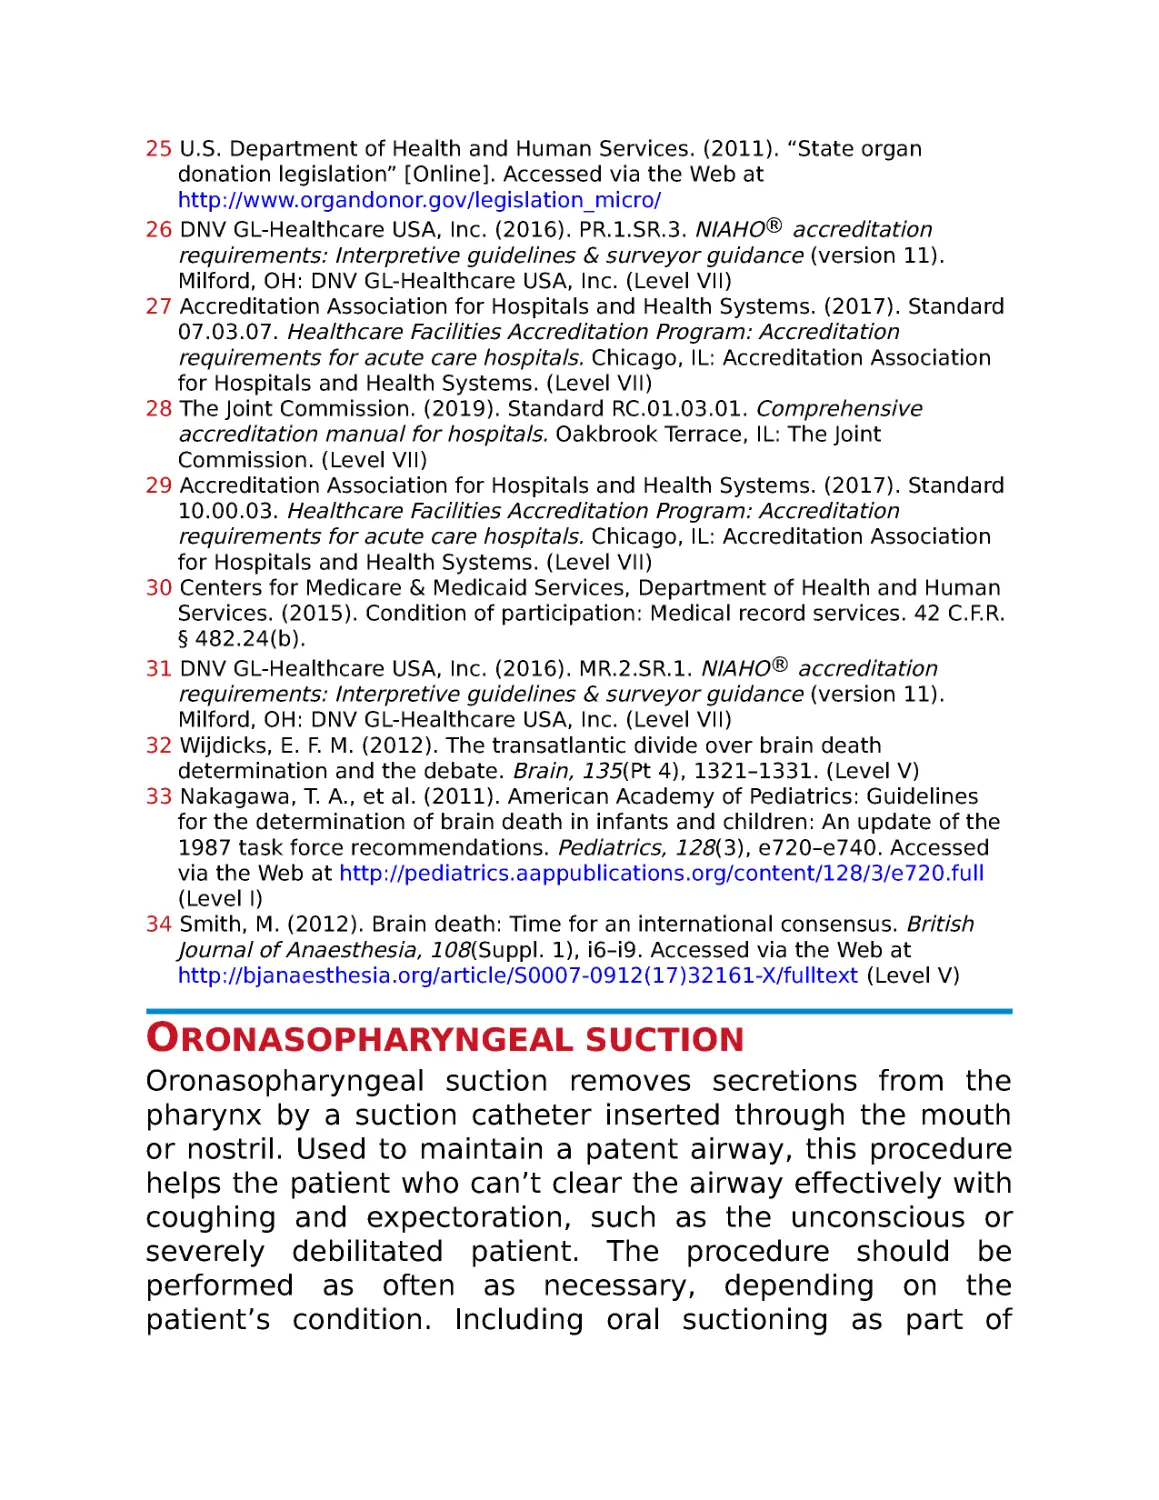 Oronasopharyngeal suction